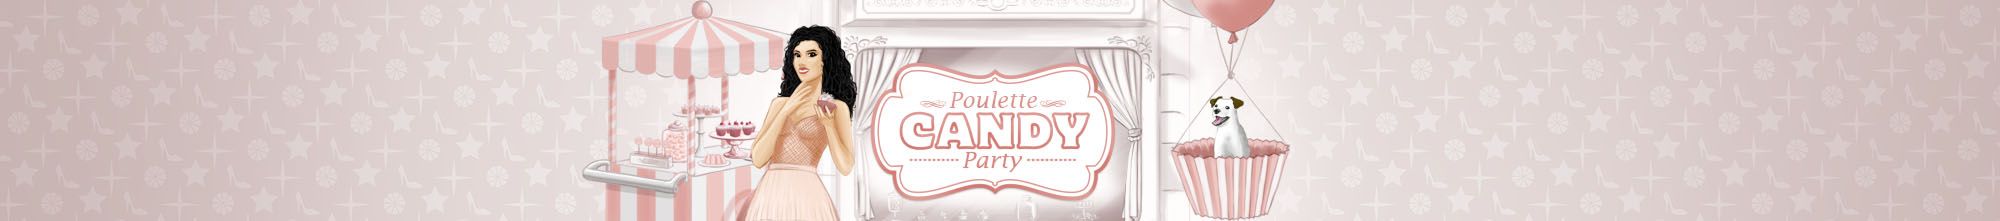 Poulette Candy Party